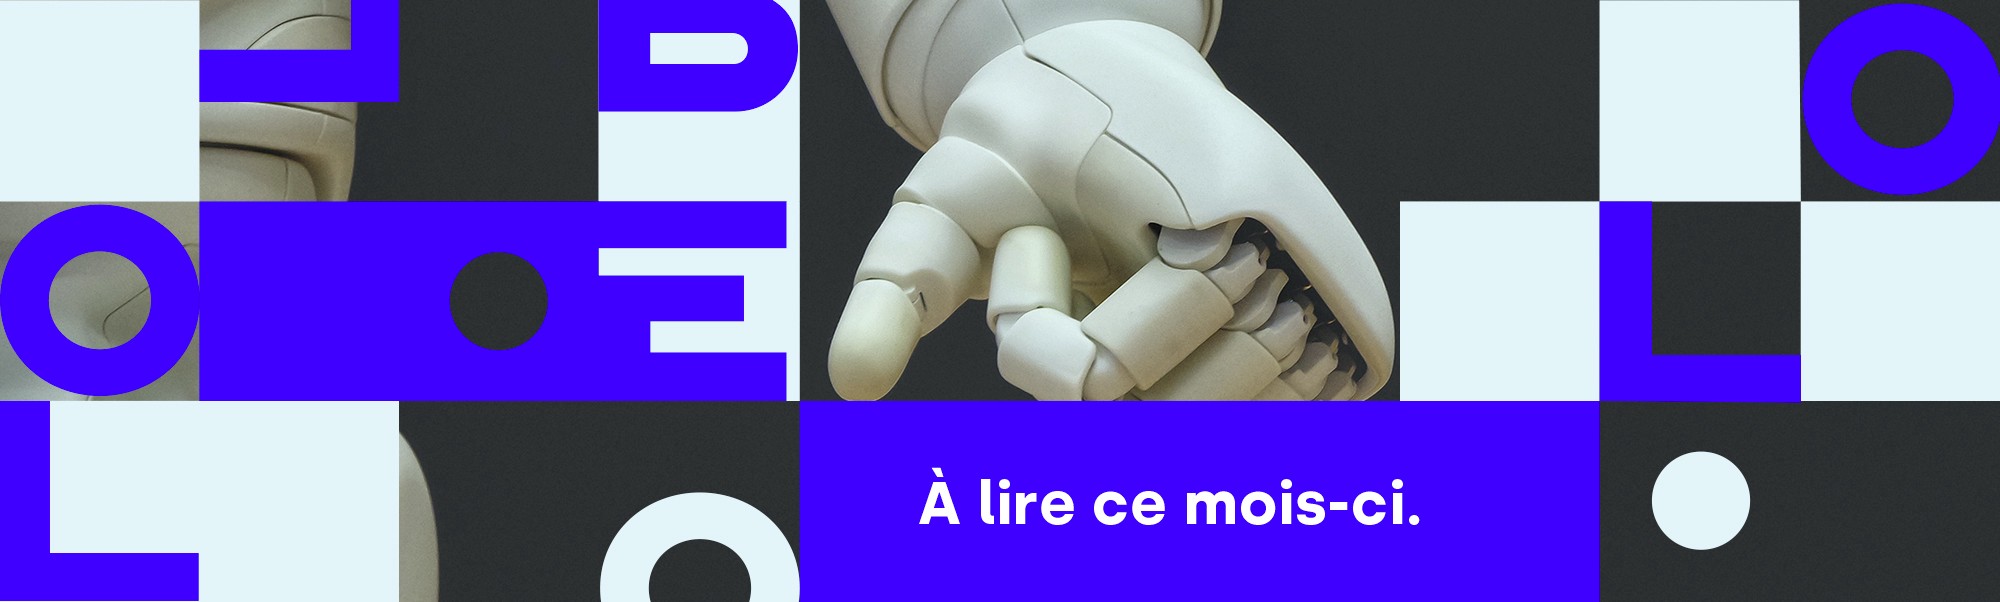 Logo de Libéo devant des mains de robot